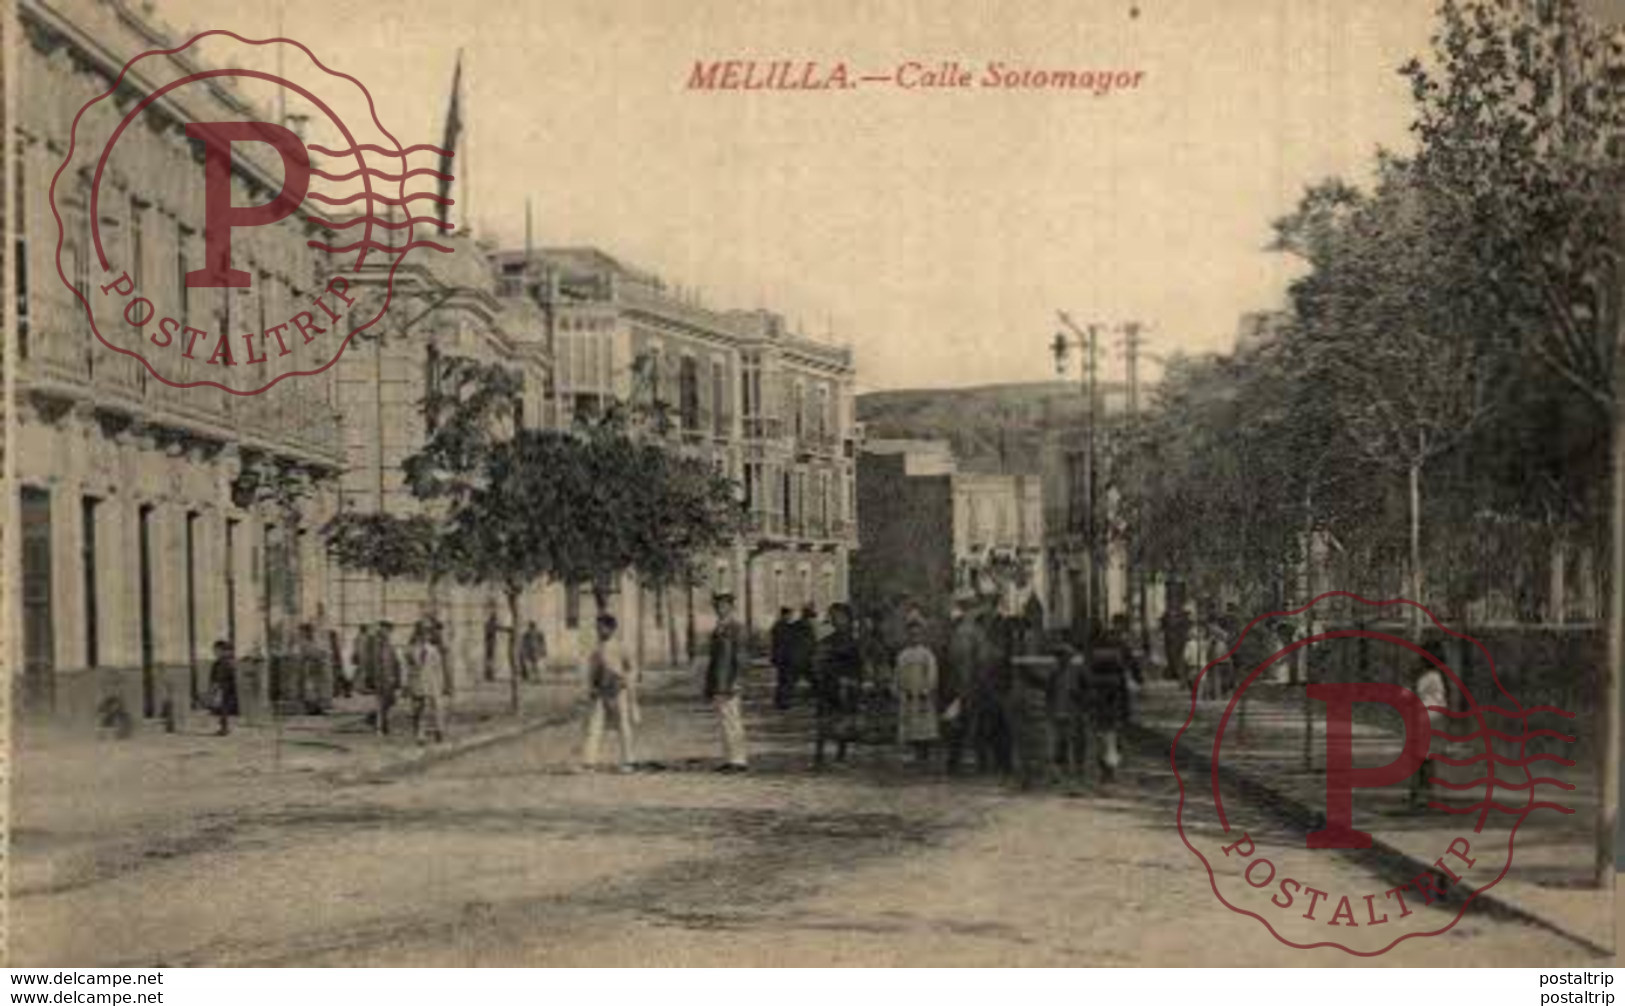 MELILLA. - CALLE SOTOMAYO - Melilla